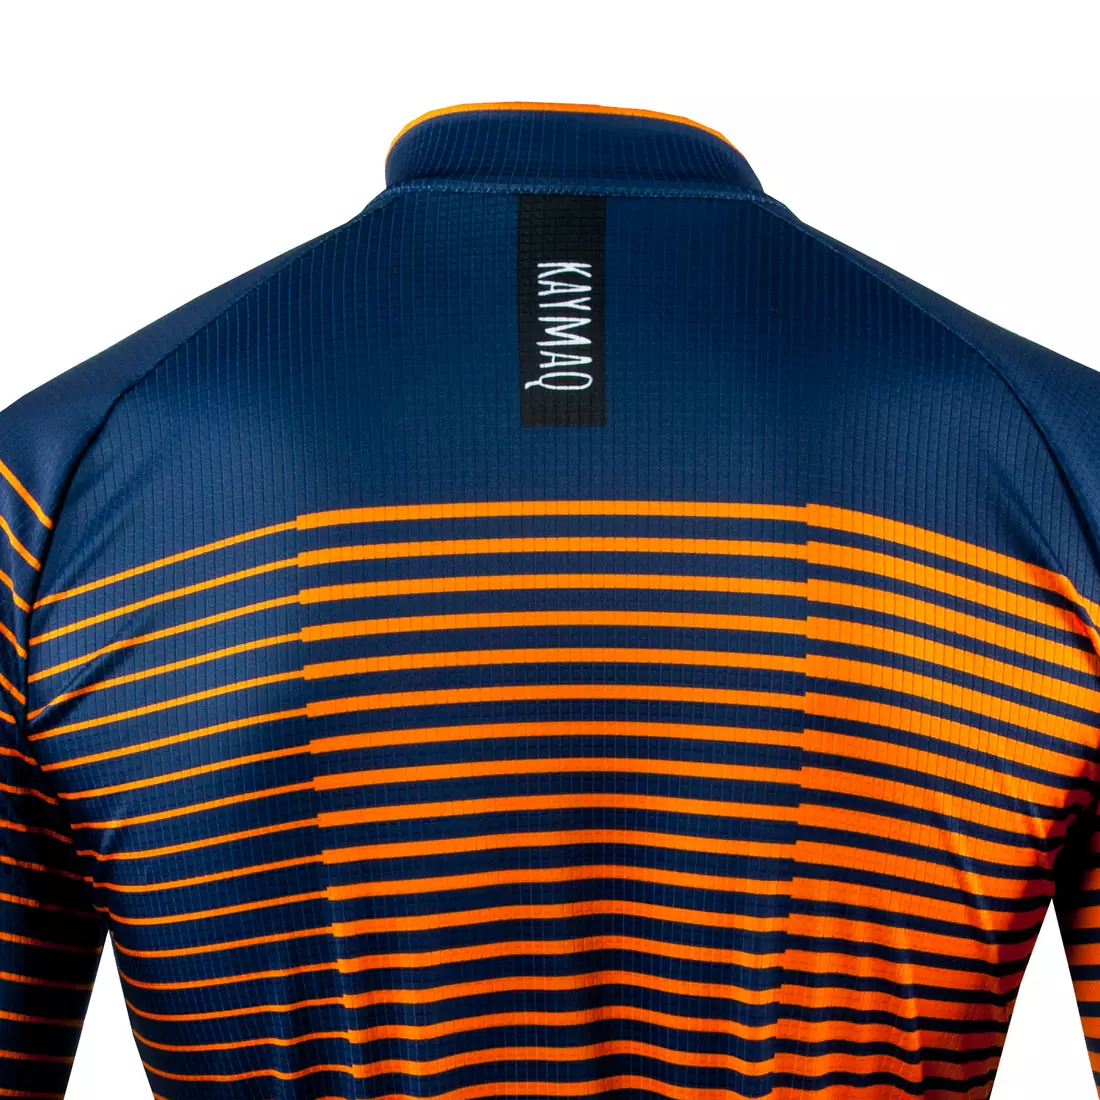 KAYMAQ DESIGN M66 men's cycling thermal jersey navy blue